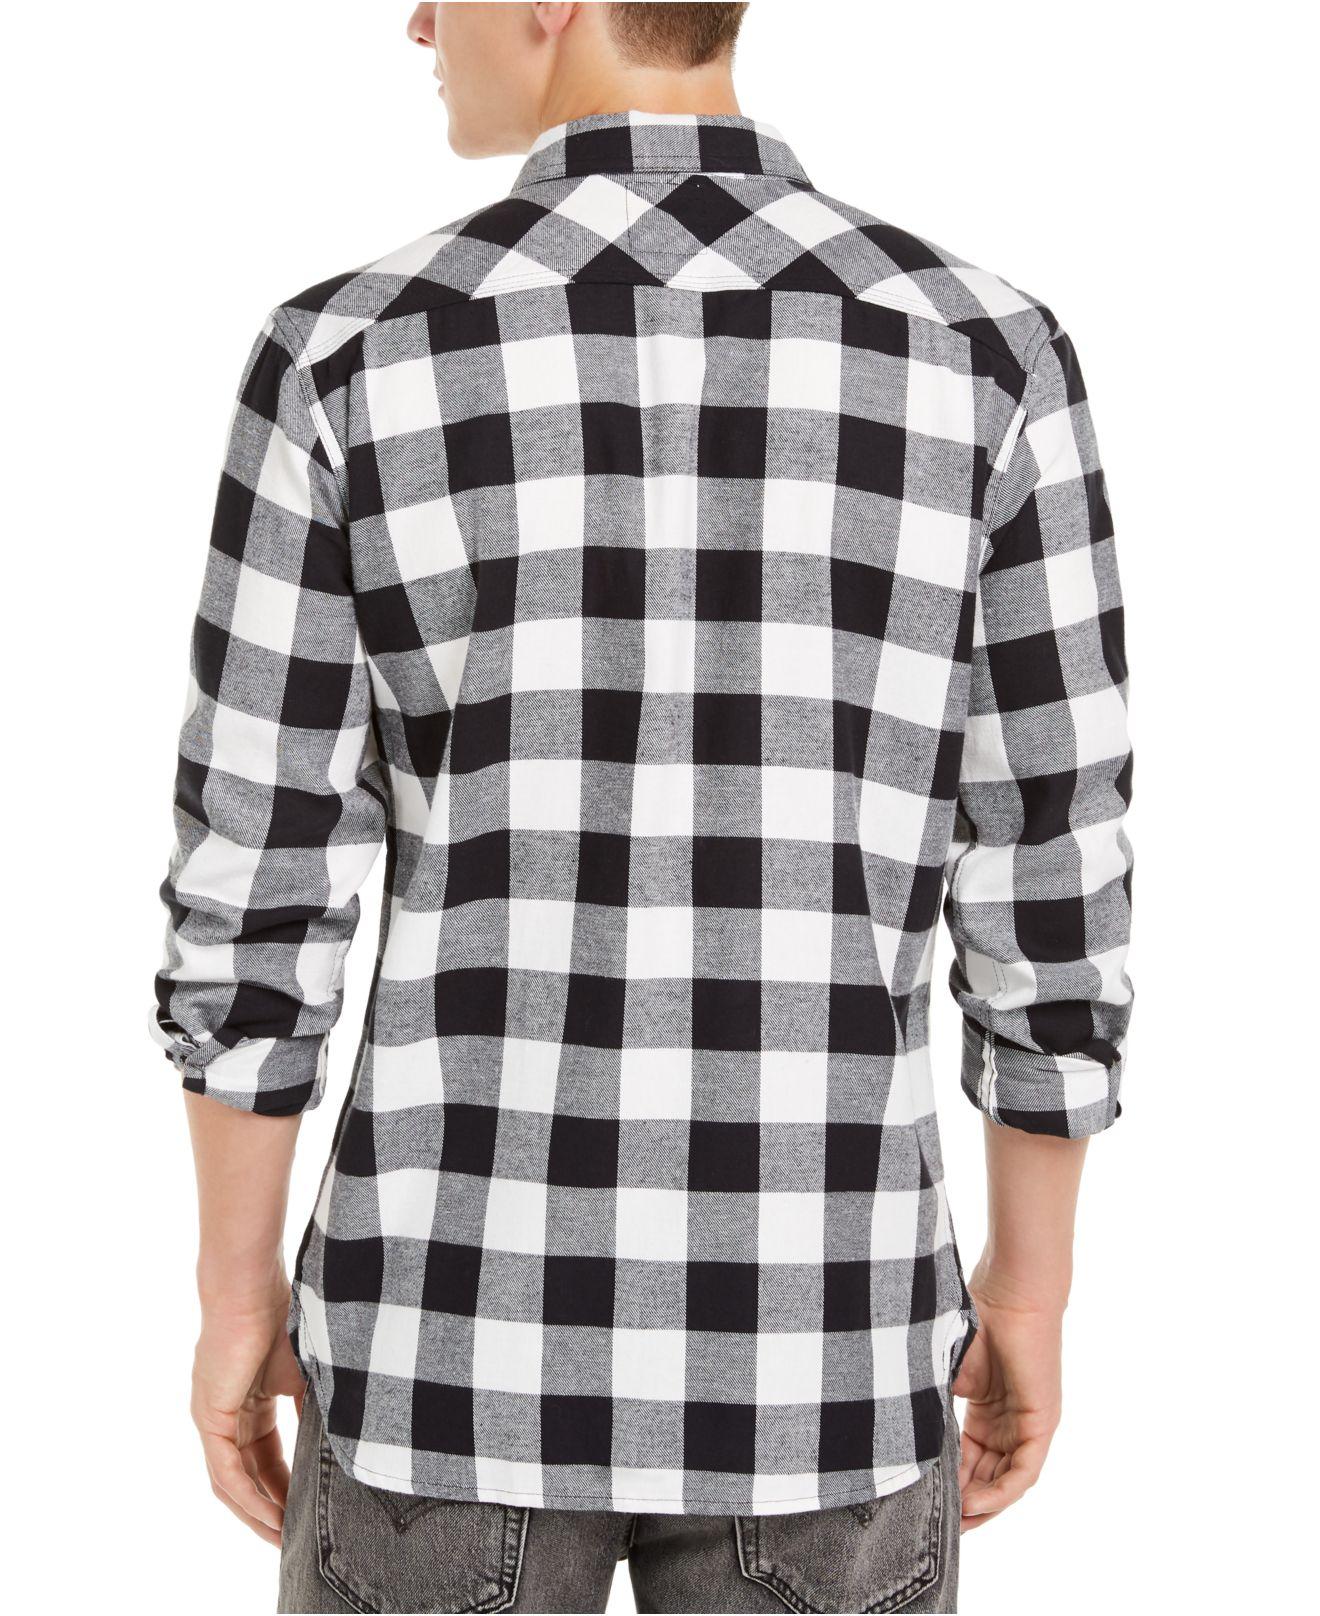 Levi's Buffalo Plaid Flannel Shirt for Men - Lyst